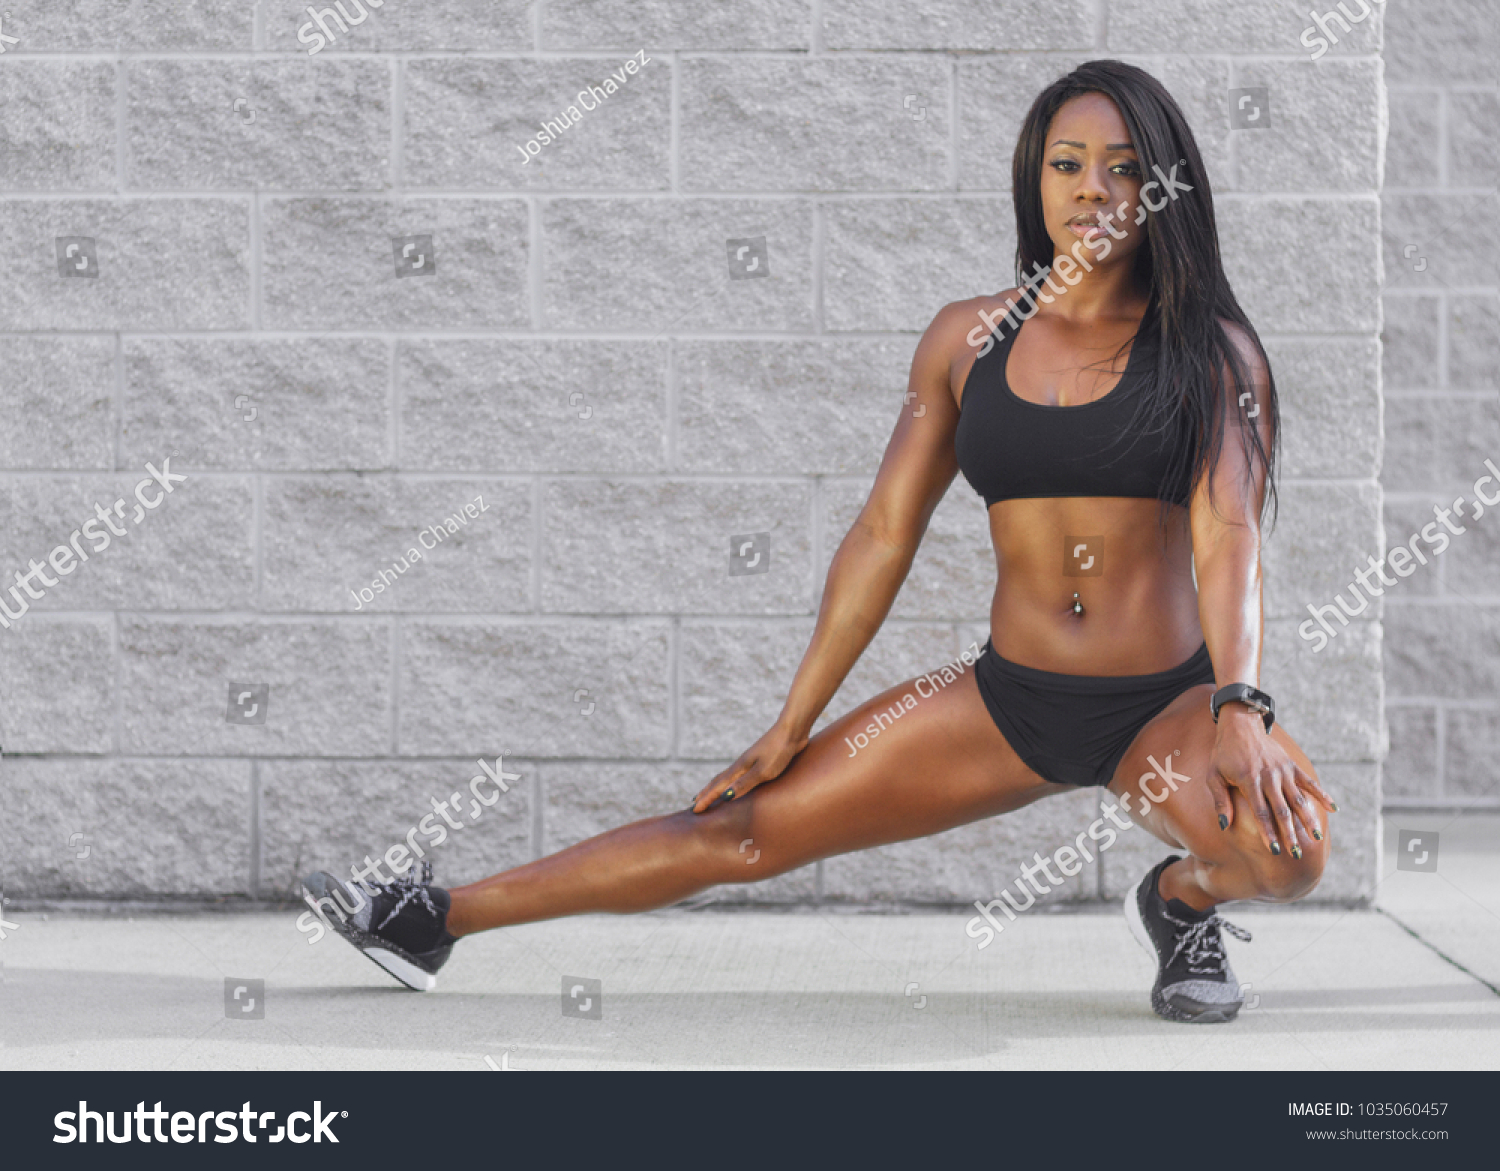 deesha gorasia recommends black fitness female models pic